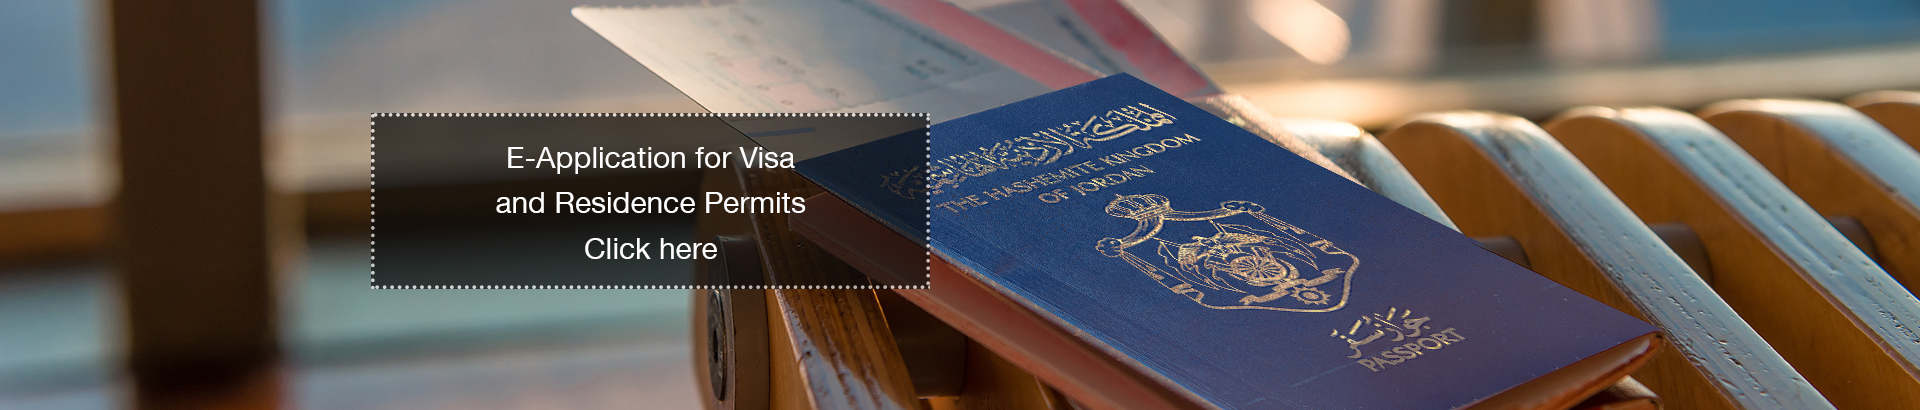  Visa applications